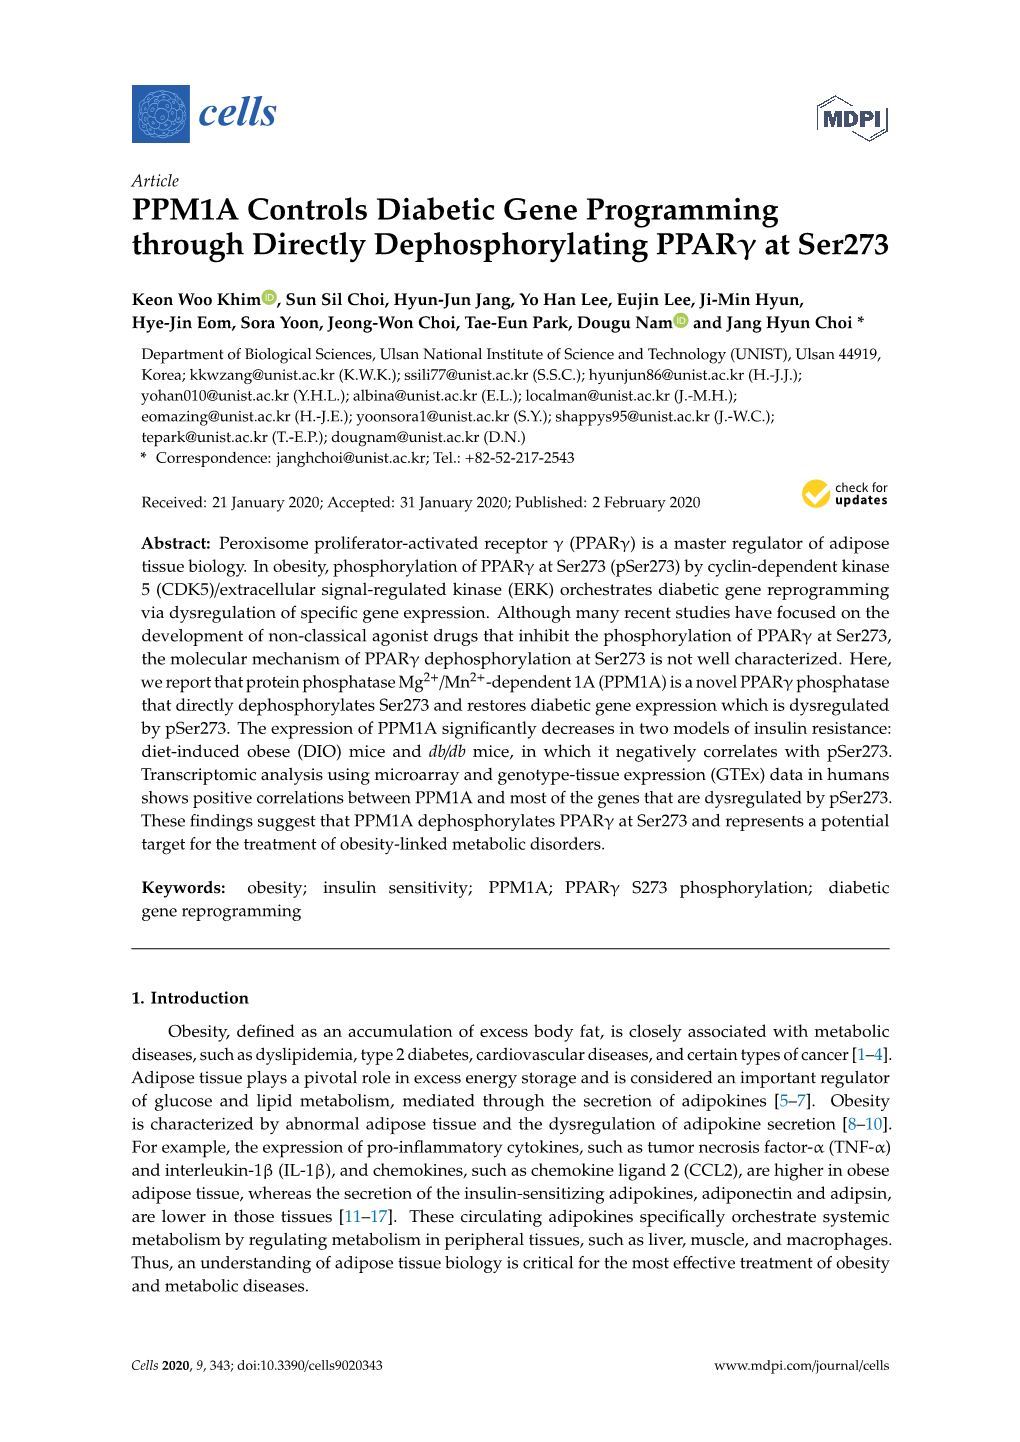 PPM1A Controls Diabetic Gene Programming Through Directly Dephosphorylating Pparγ at Ser273